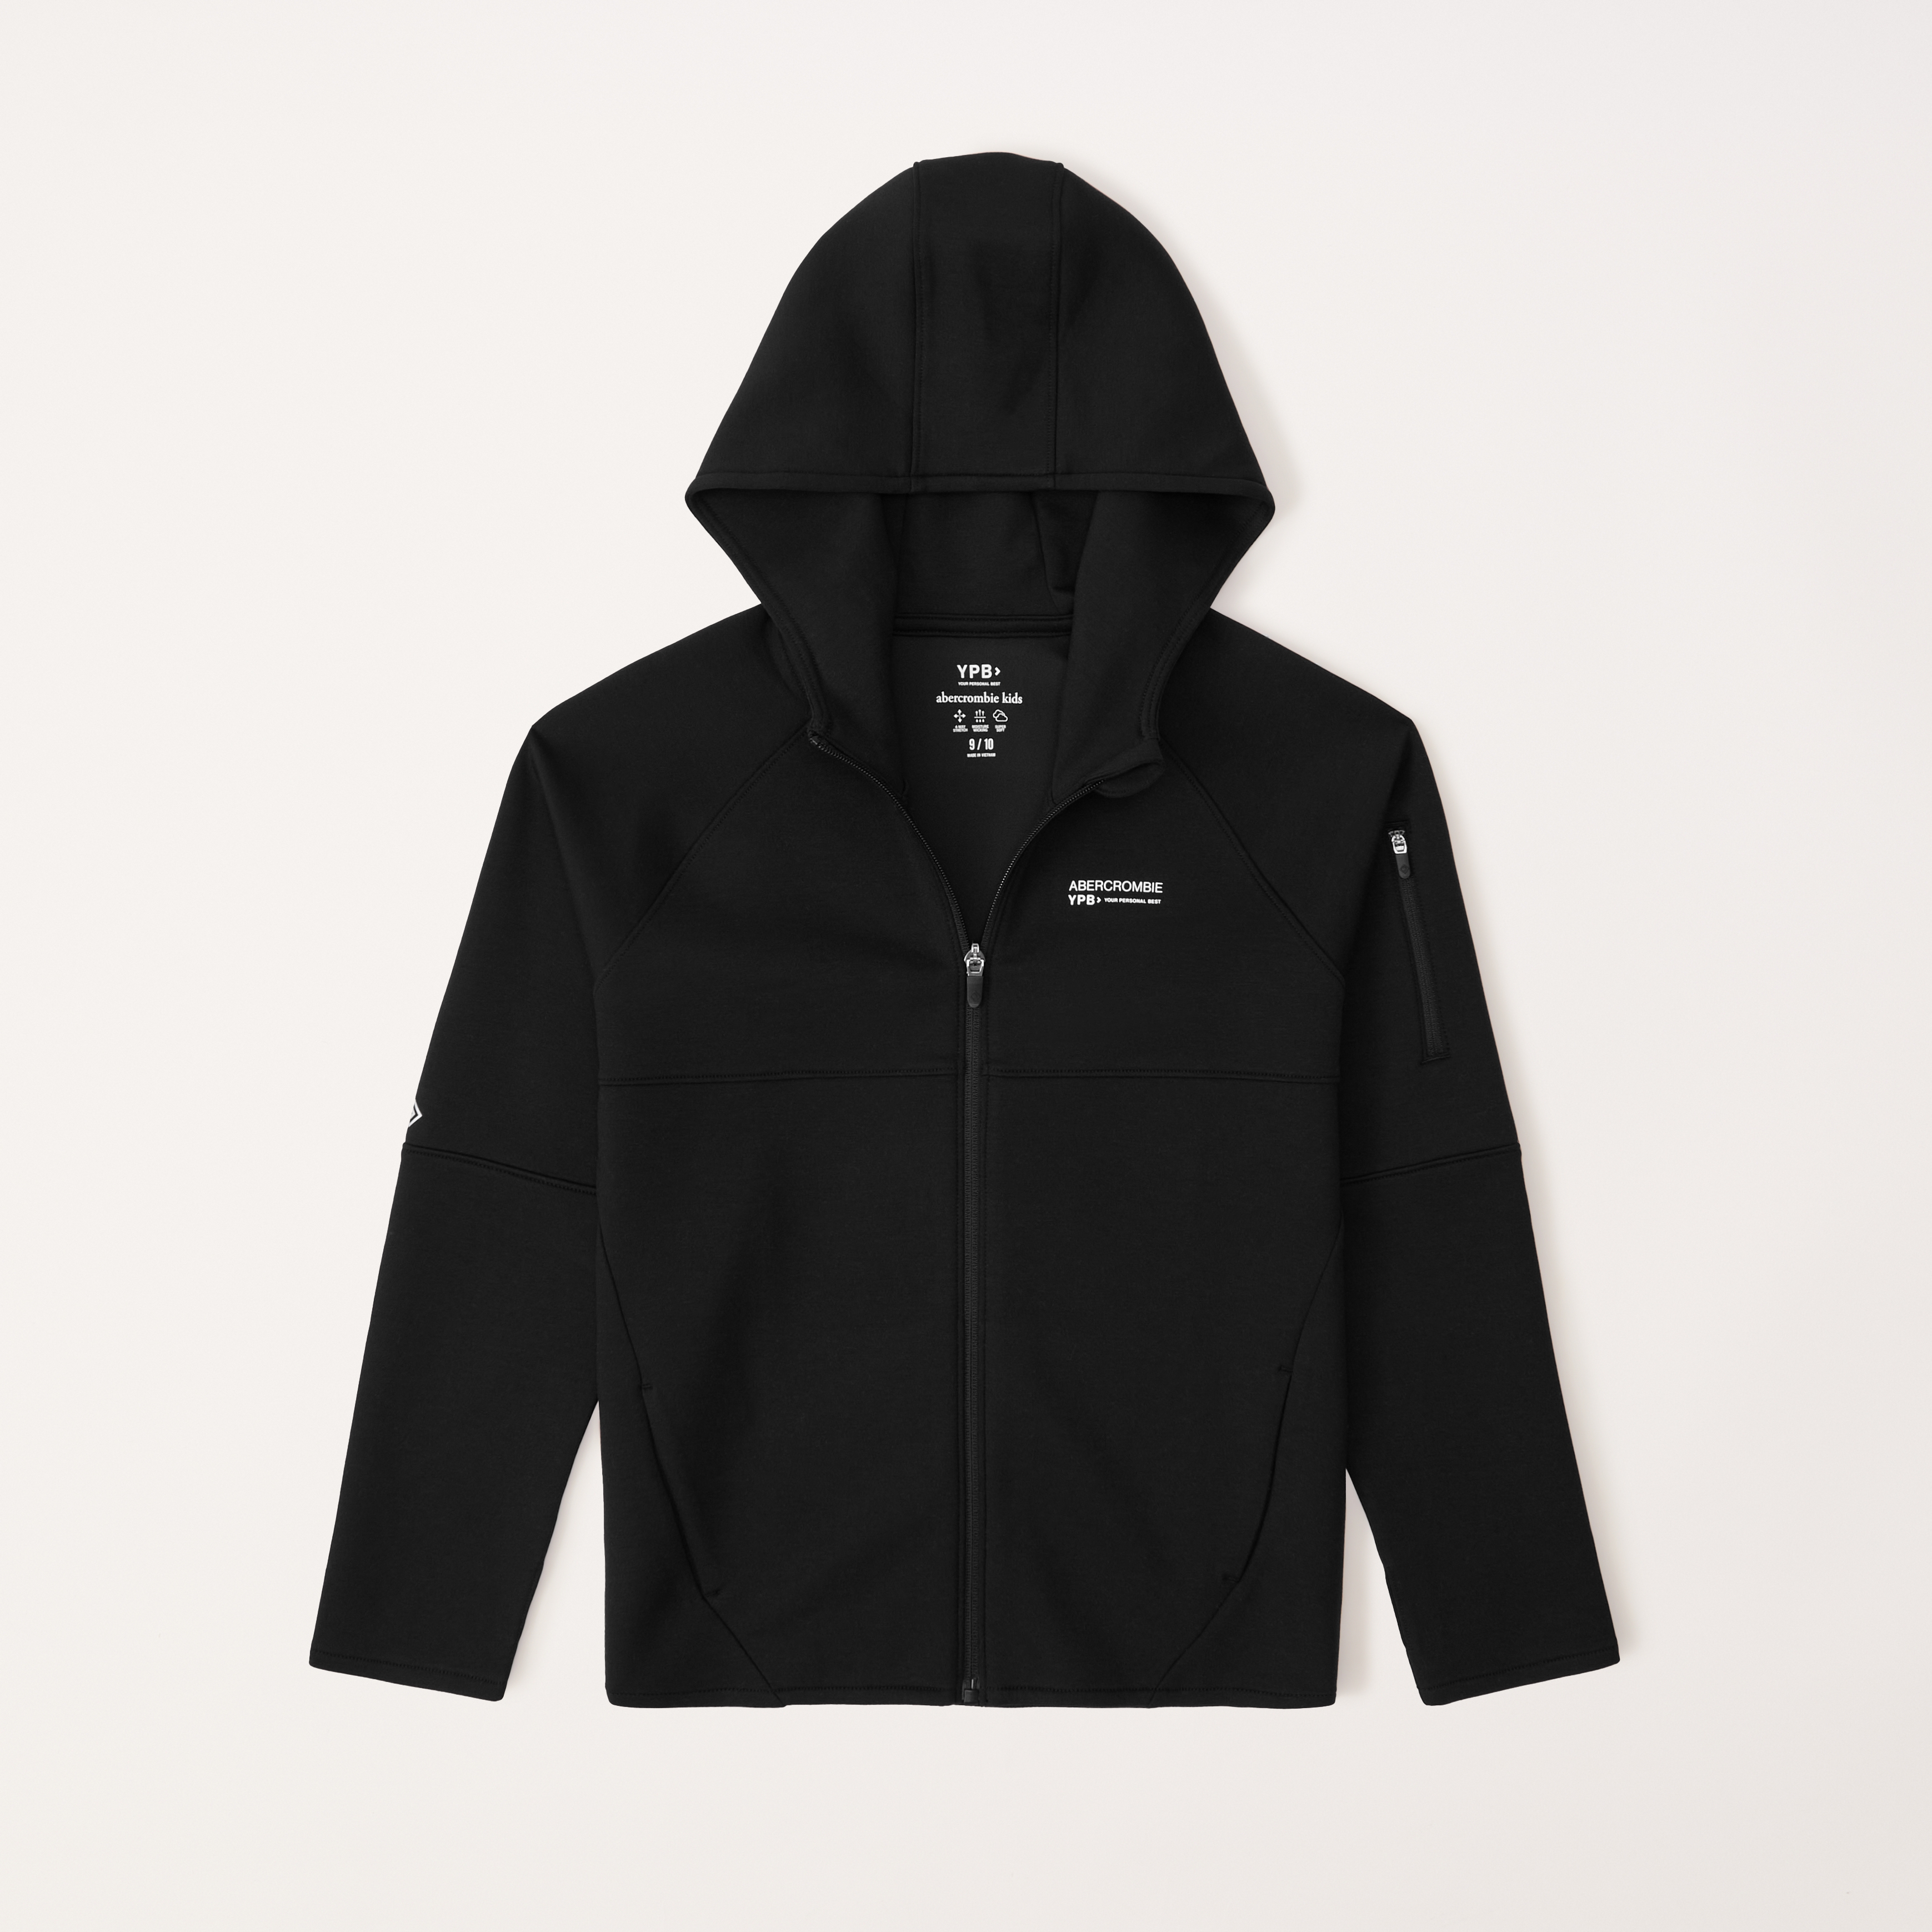 boys ypb neoknit active logo full-zip hoodie | boys tops 